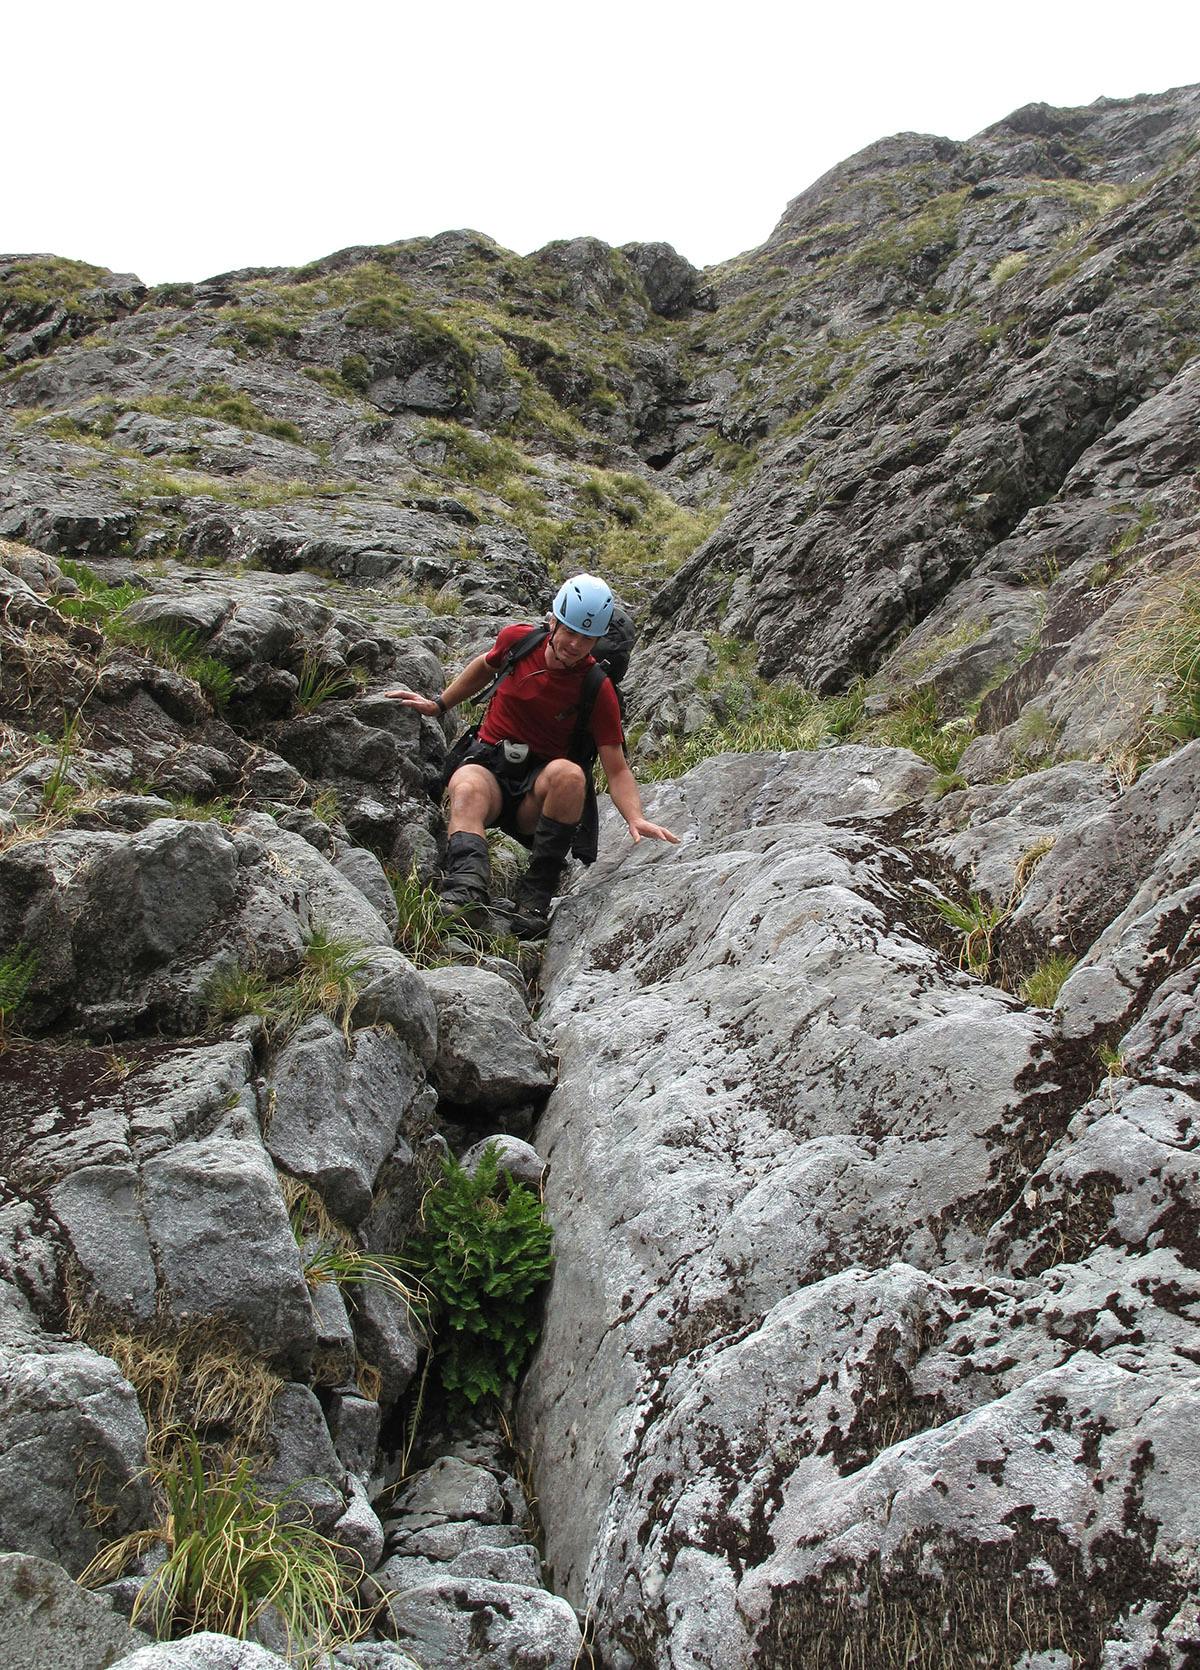 Descending the rocky chute that is Gifford Gap. Photo: Richard Daviss